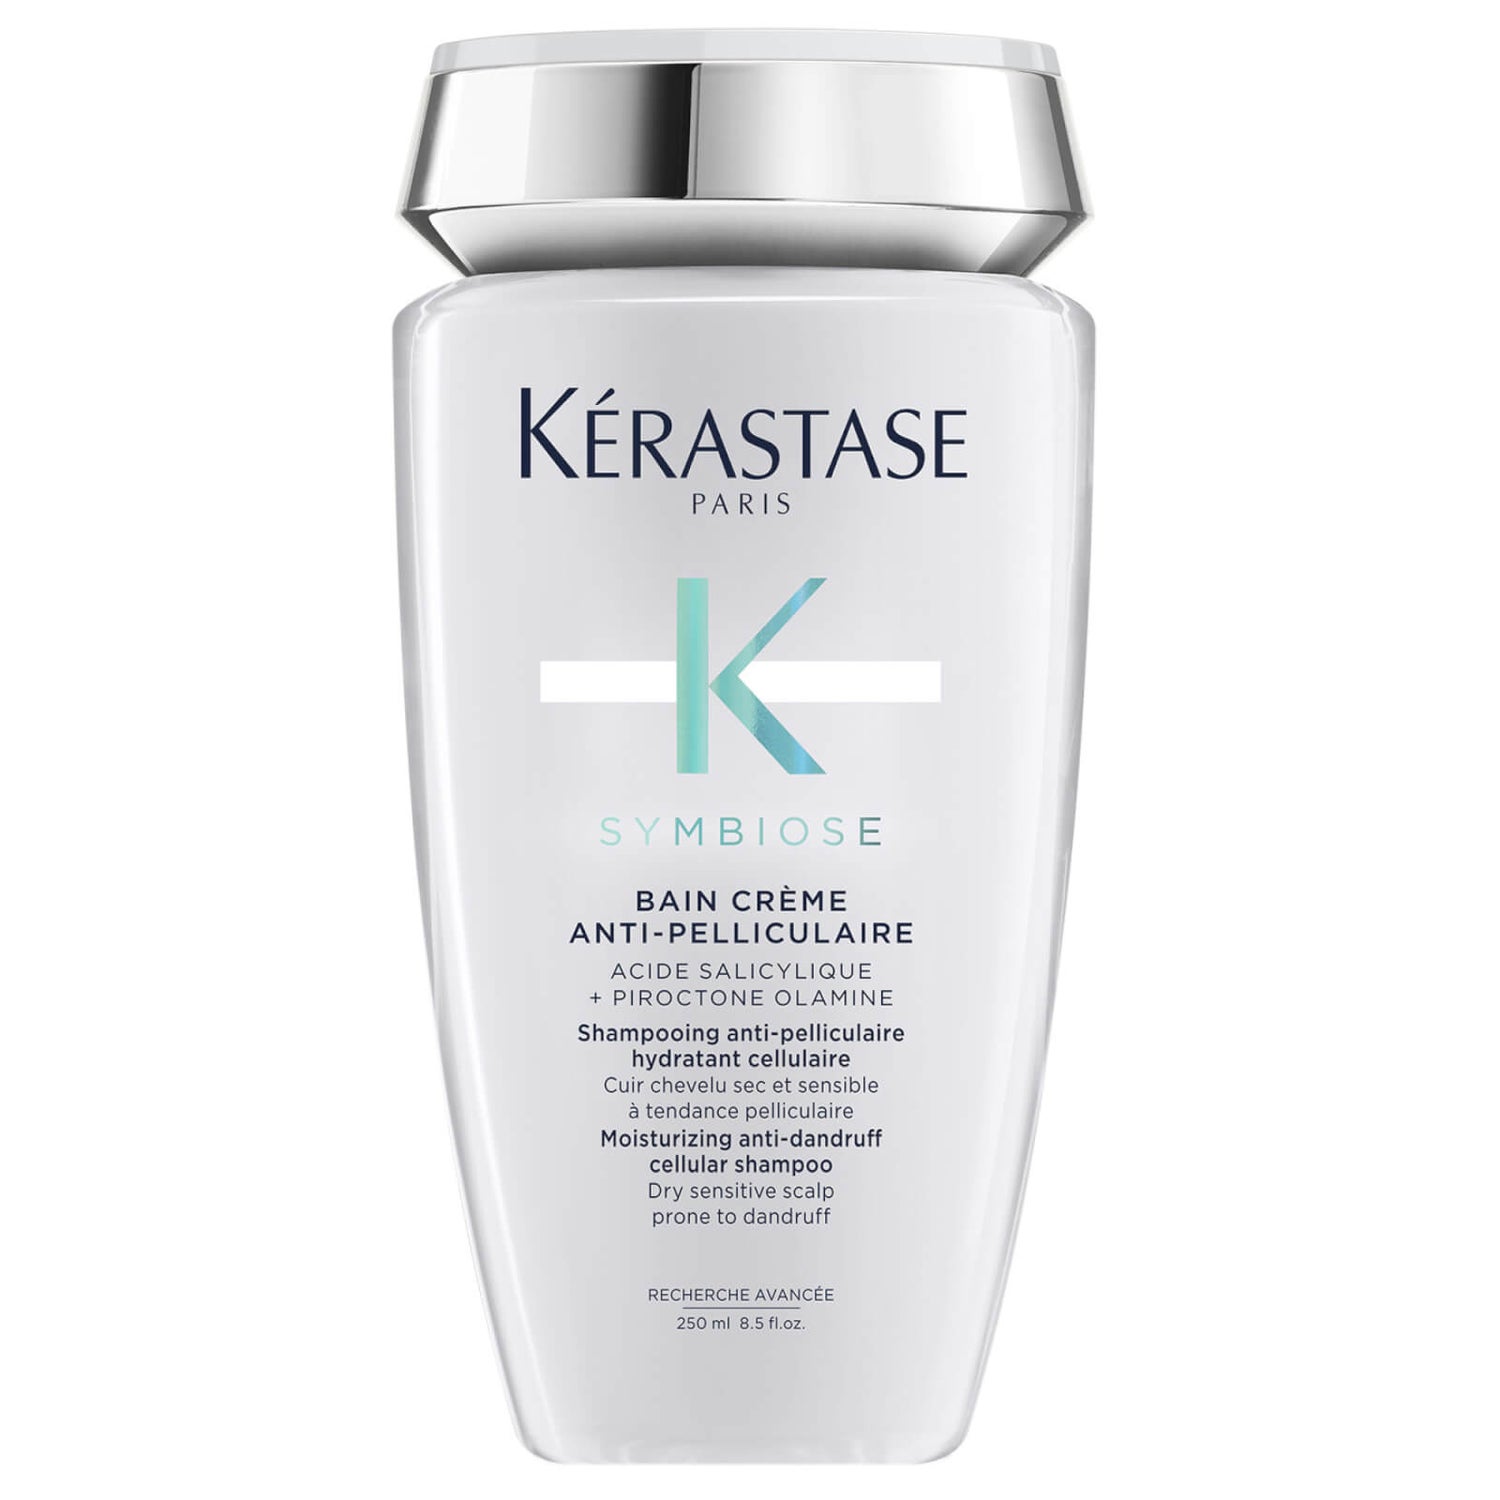 Kérastase Symbiose Moisturising Anti-Dandruff Cellular Shampoo For Dry Sensitive Scalp Prone To Dandruff 250ml